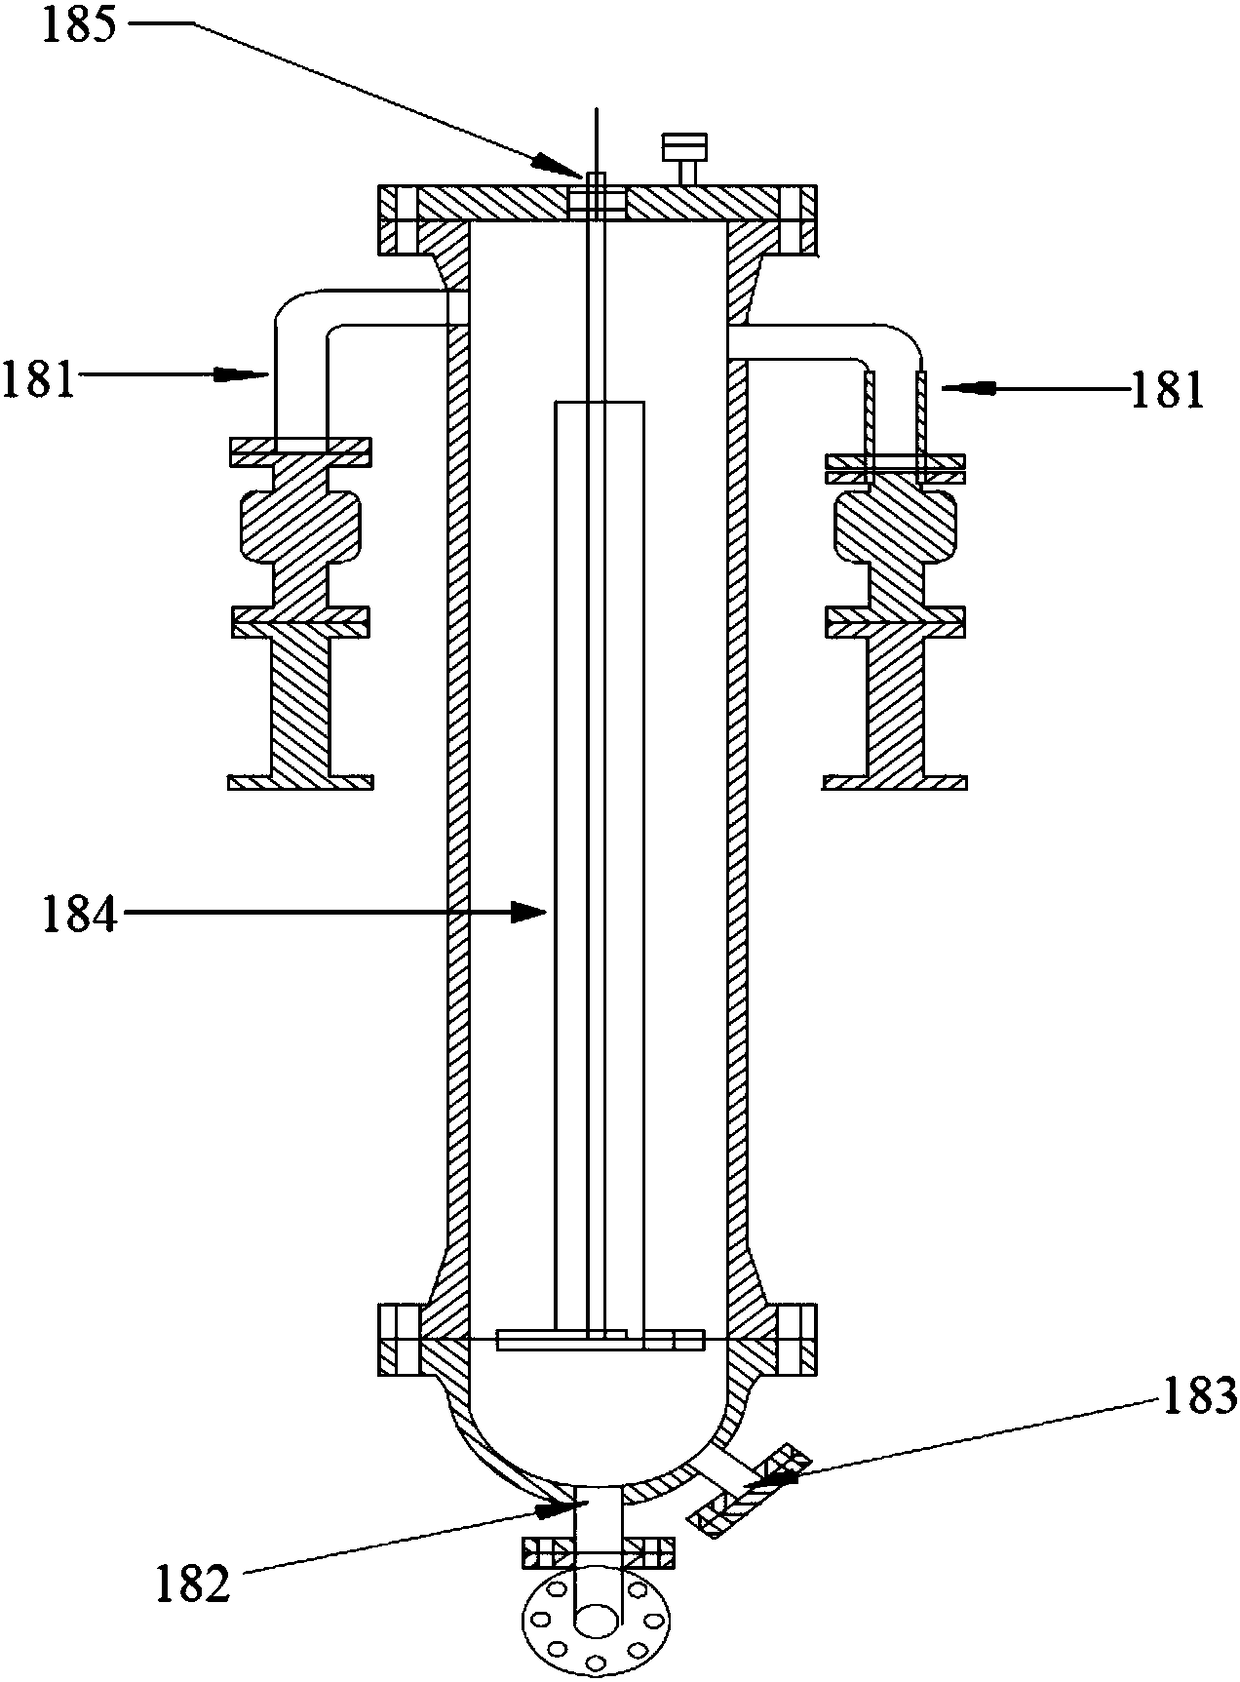 Production method and device of needle coke